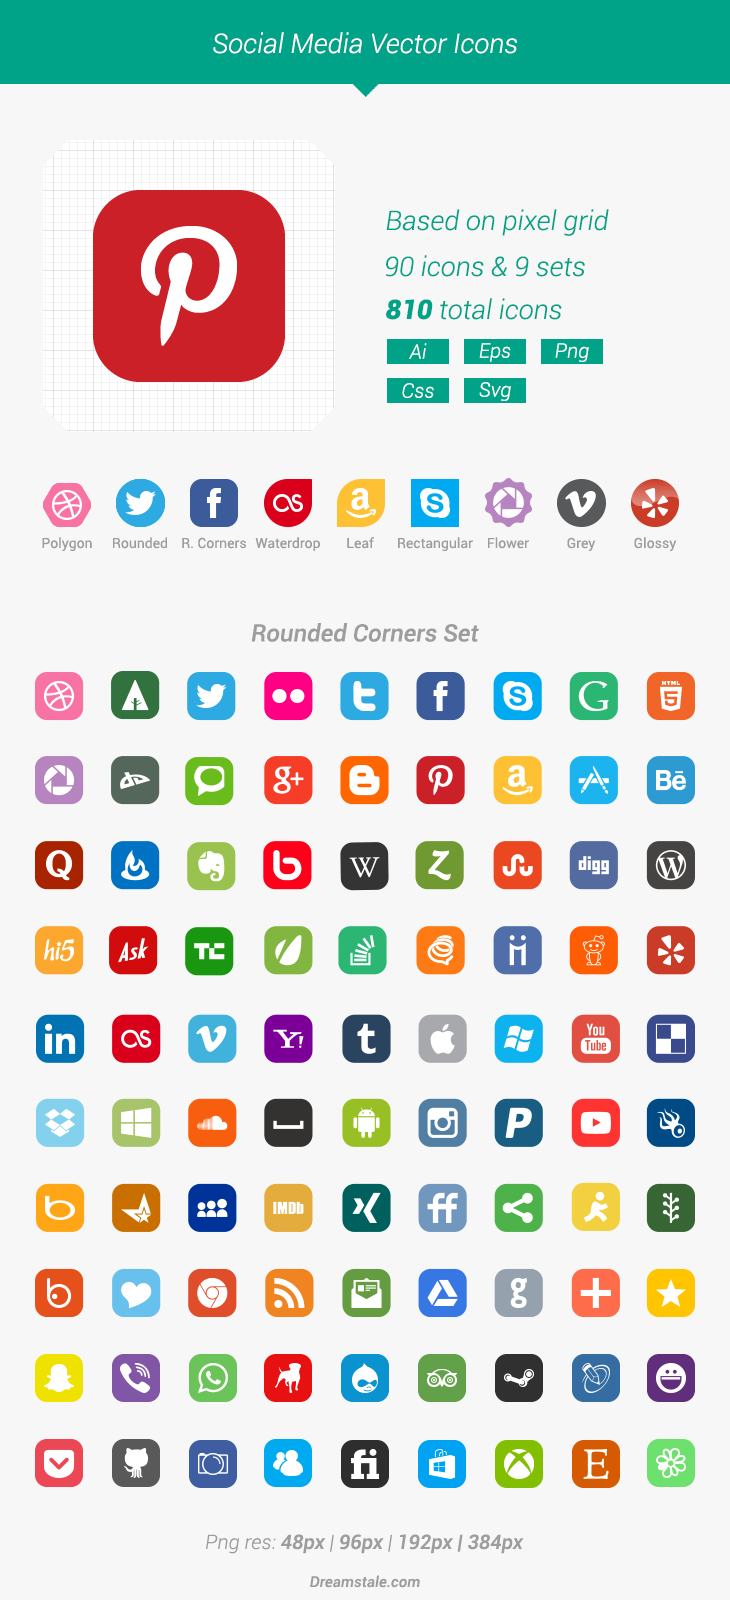 Free Download: 90 Social Media Vector Icons